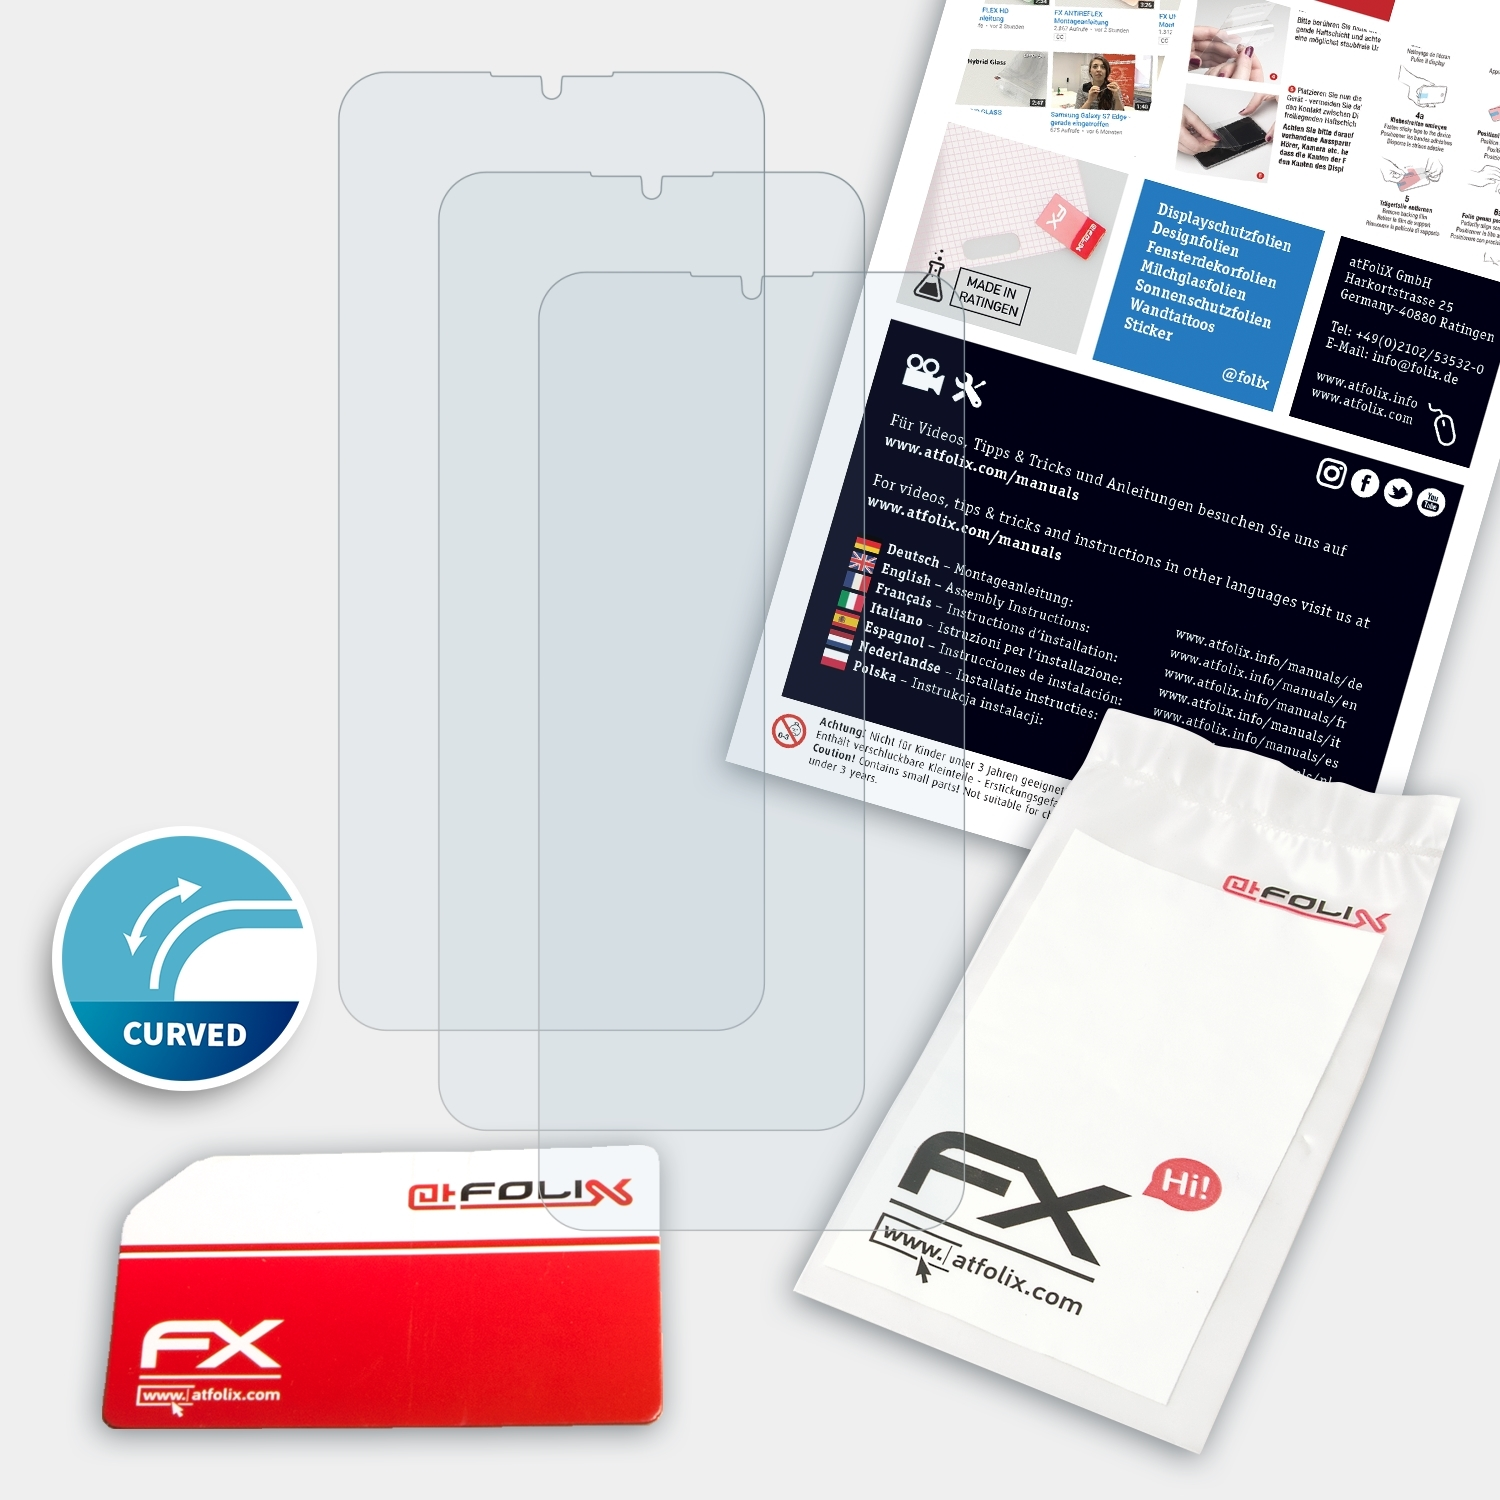 FX-ActiFleX Alcatel 3x 3X (2020)) Displayschutz(für ATFOLIX